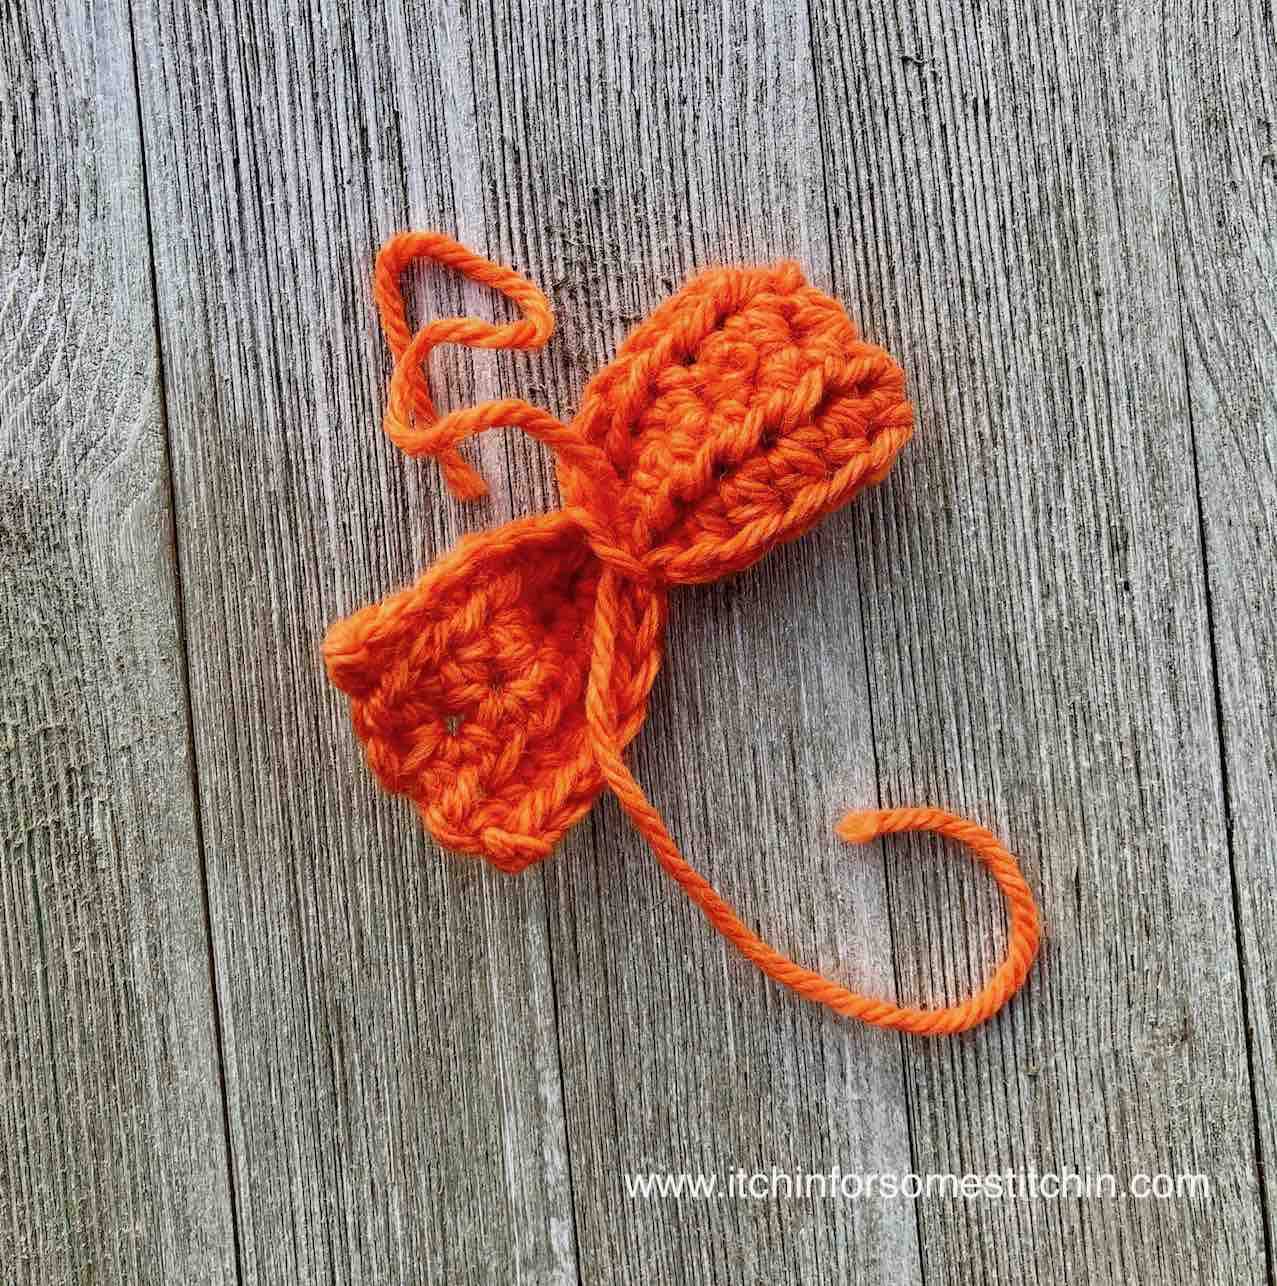 How to Crochet a Bowtie by www.itchinforsomestitchin.com